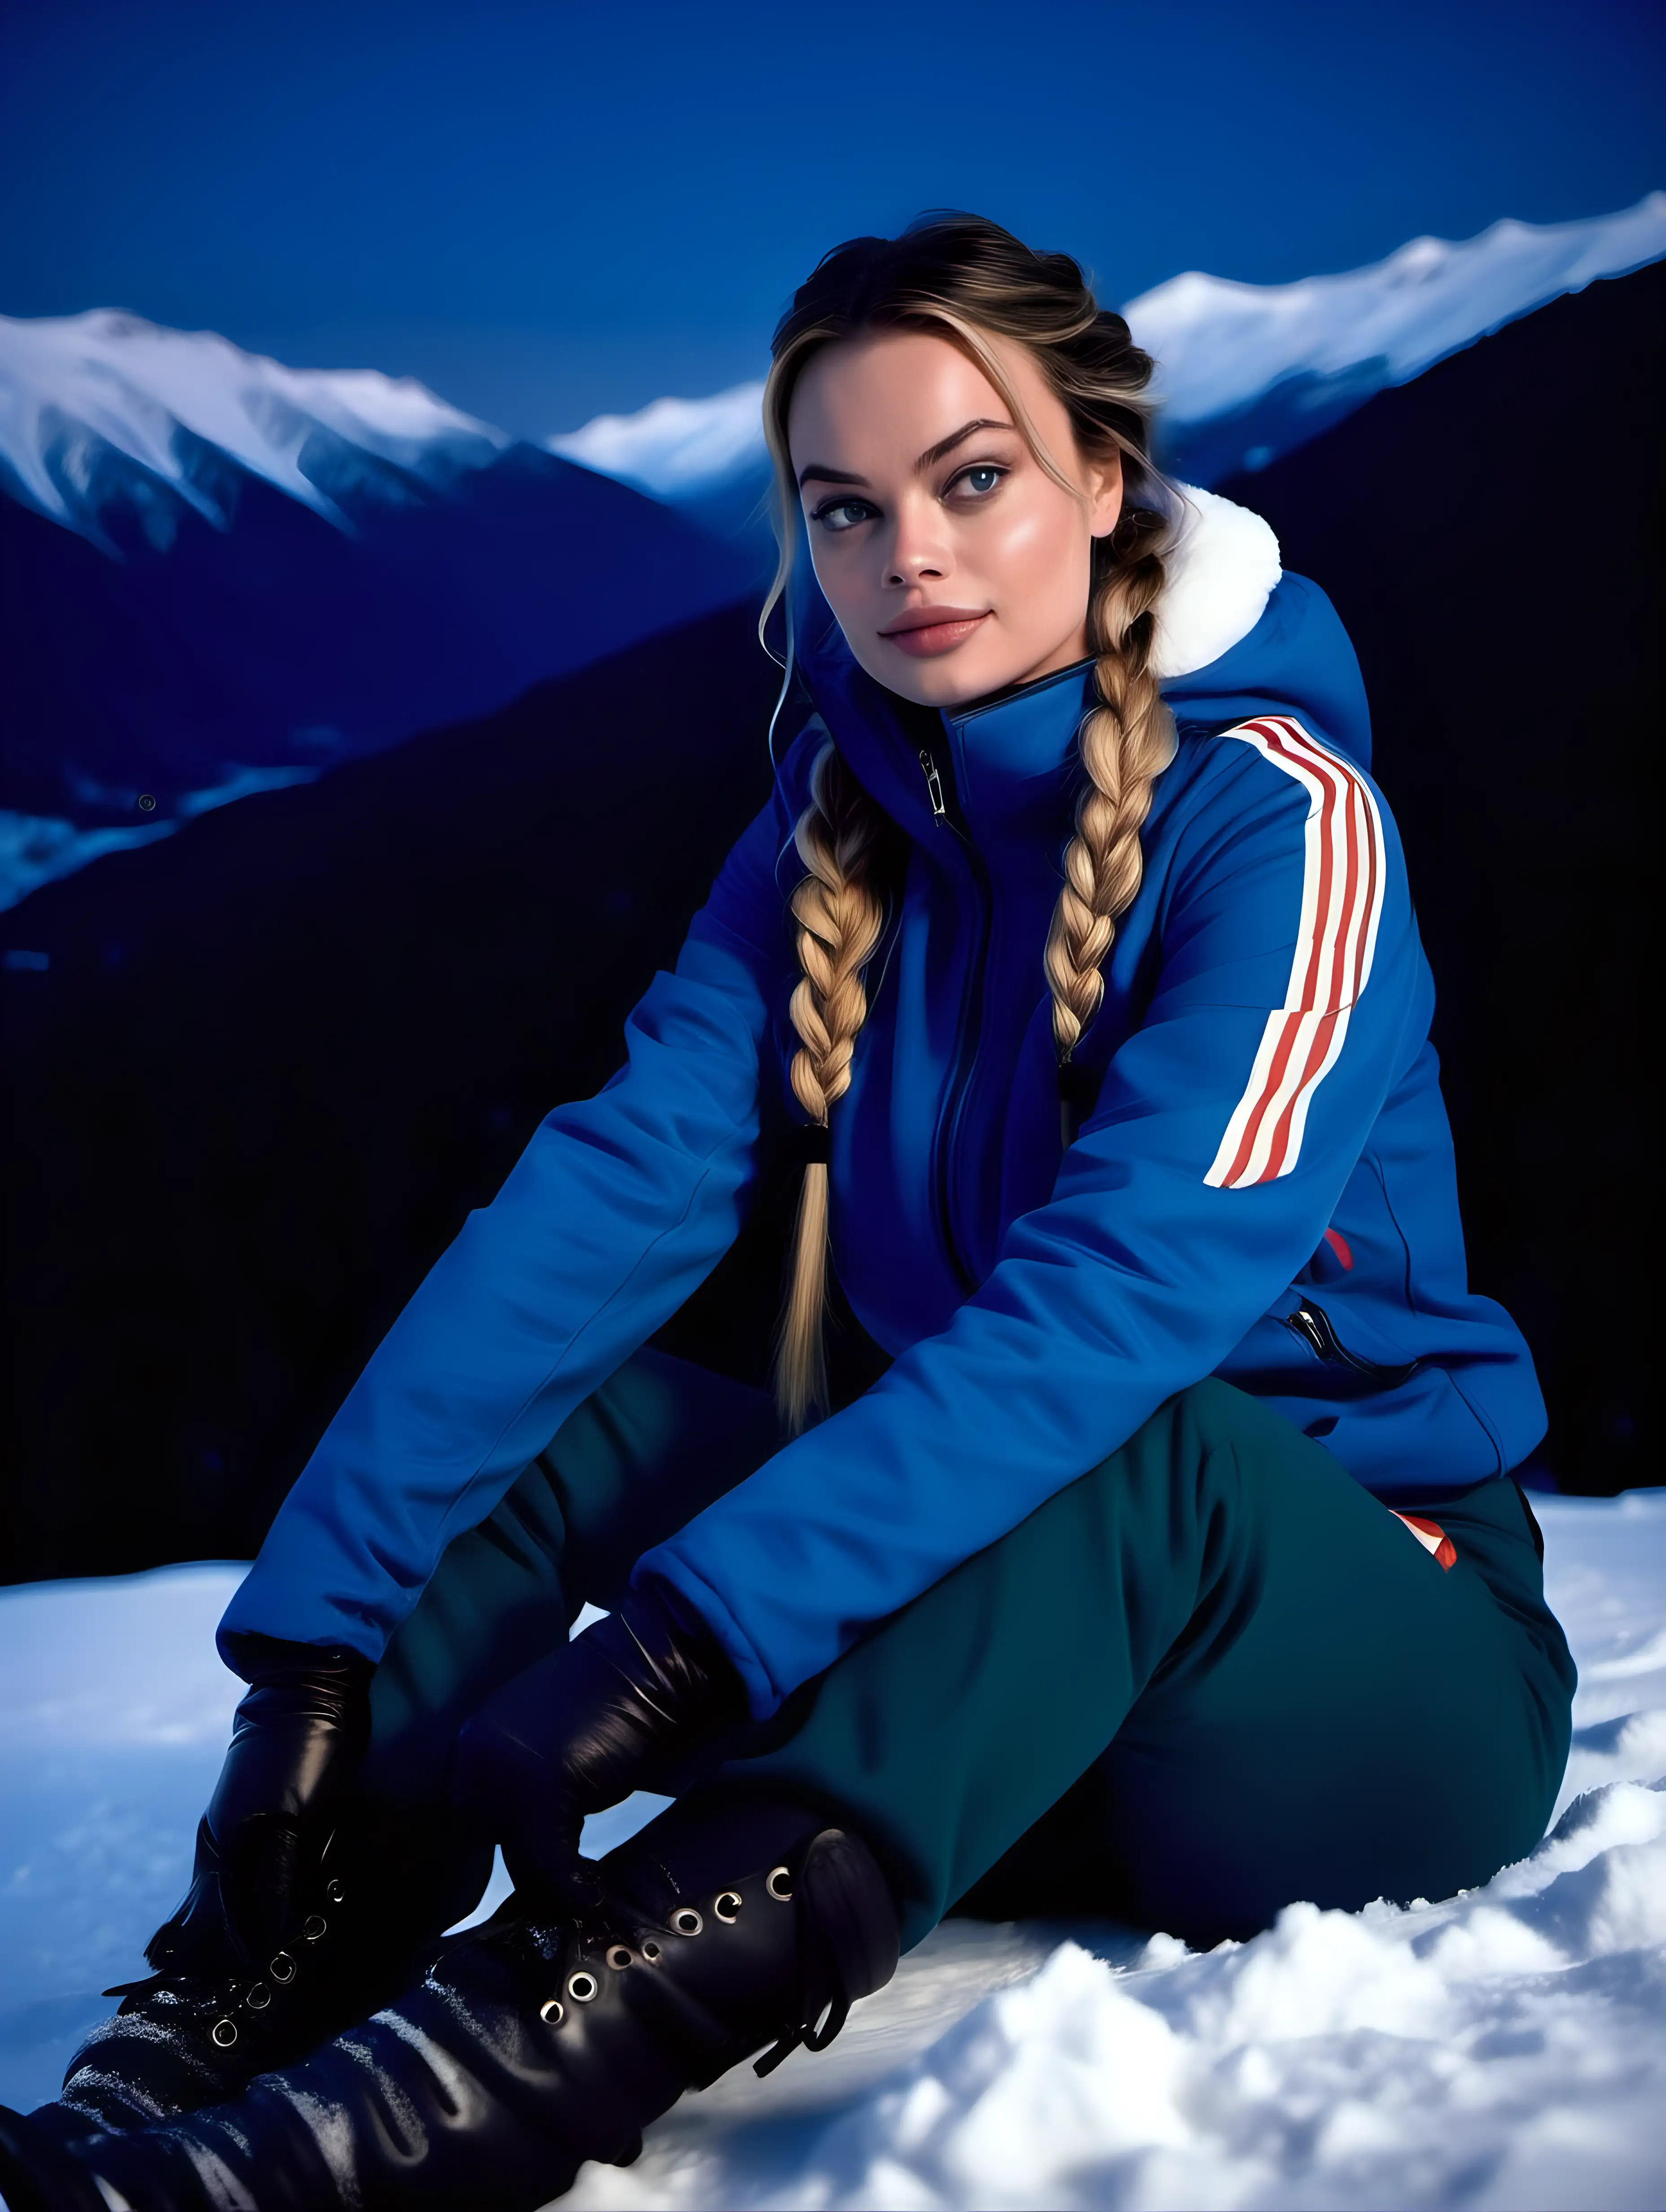 Snowy Mountain Night Margot Robbie Lookalike in Ski Attire